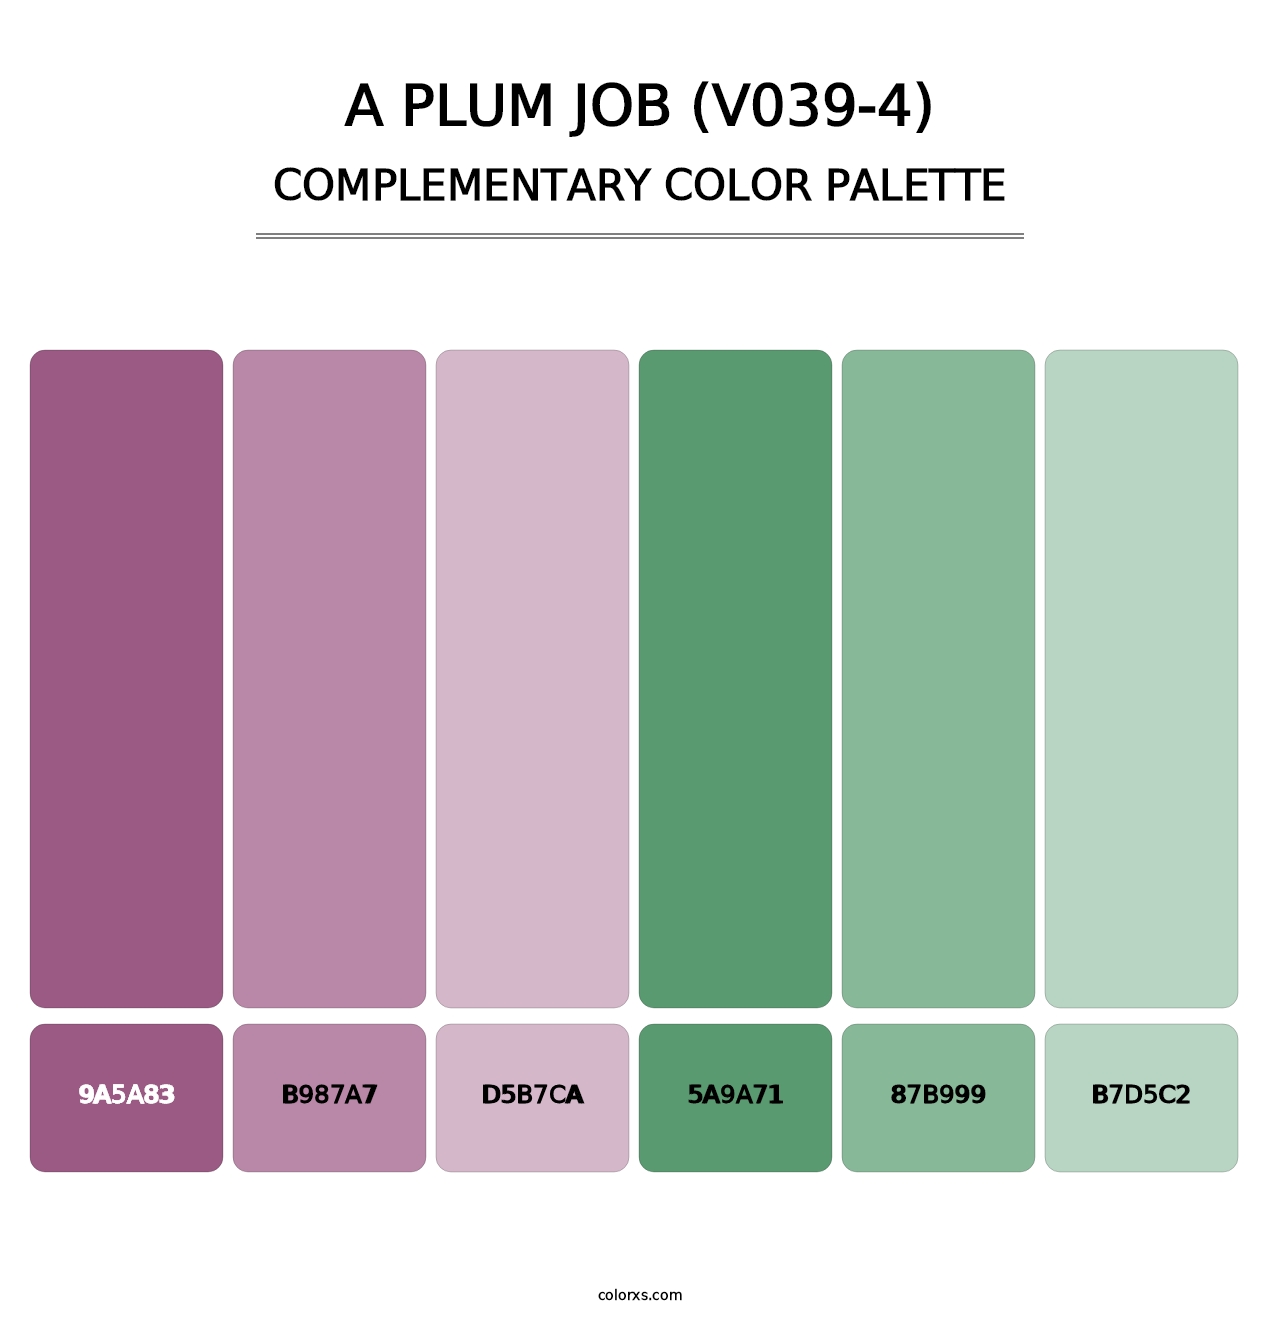 A Plum Job (V039-4) - Complementary Color Palette